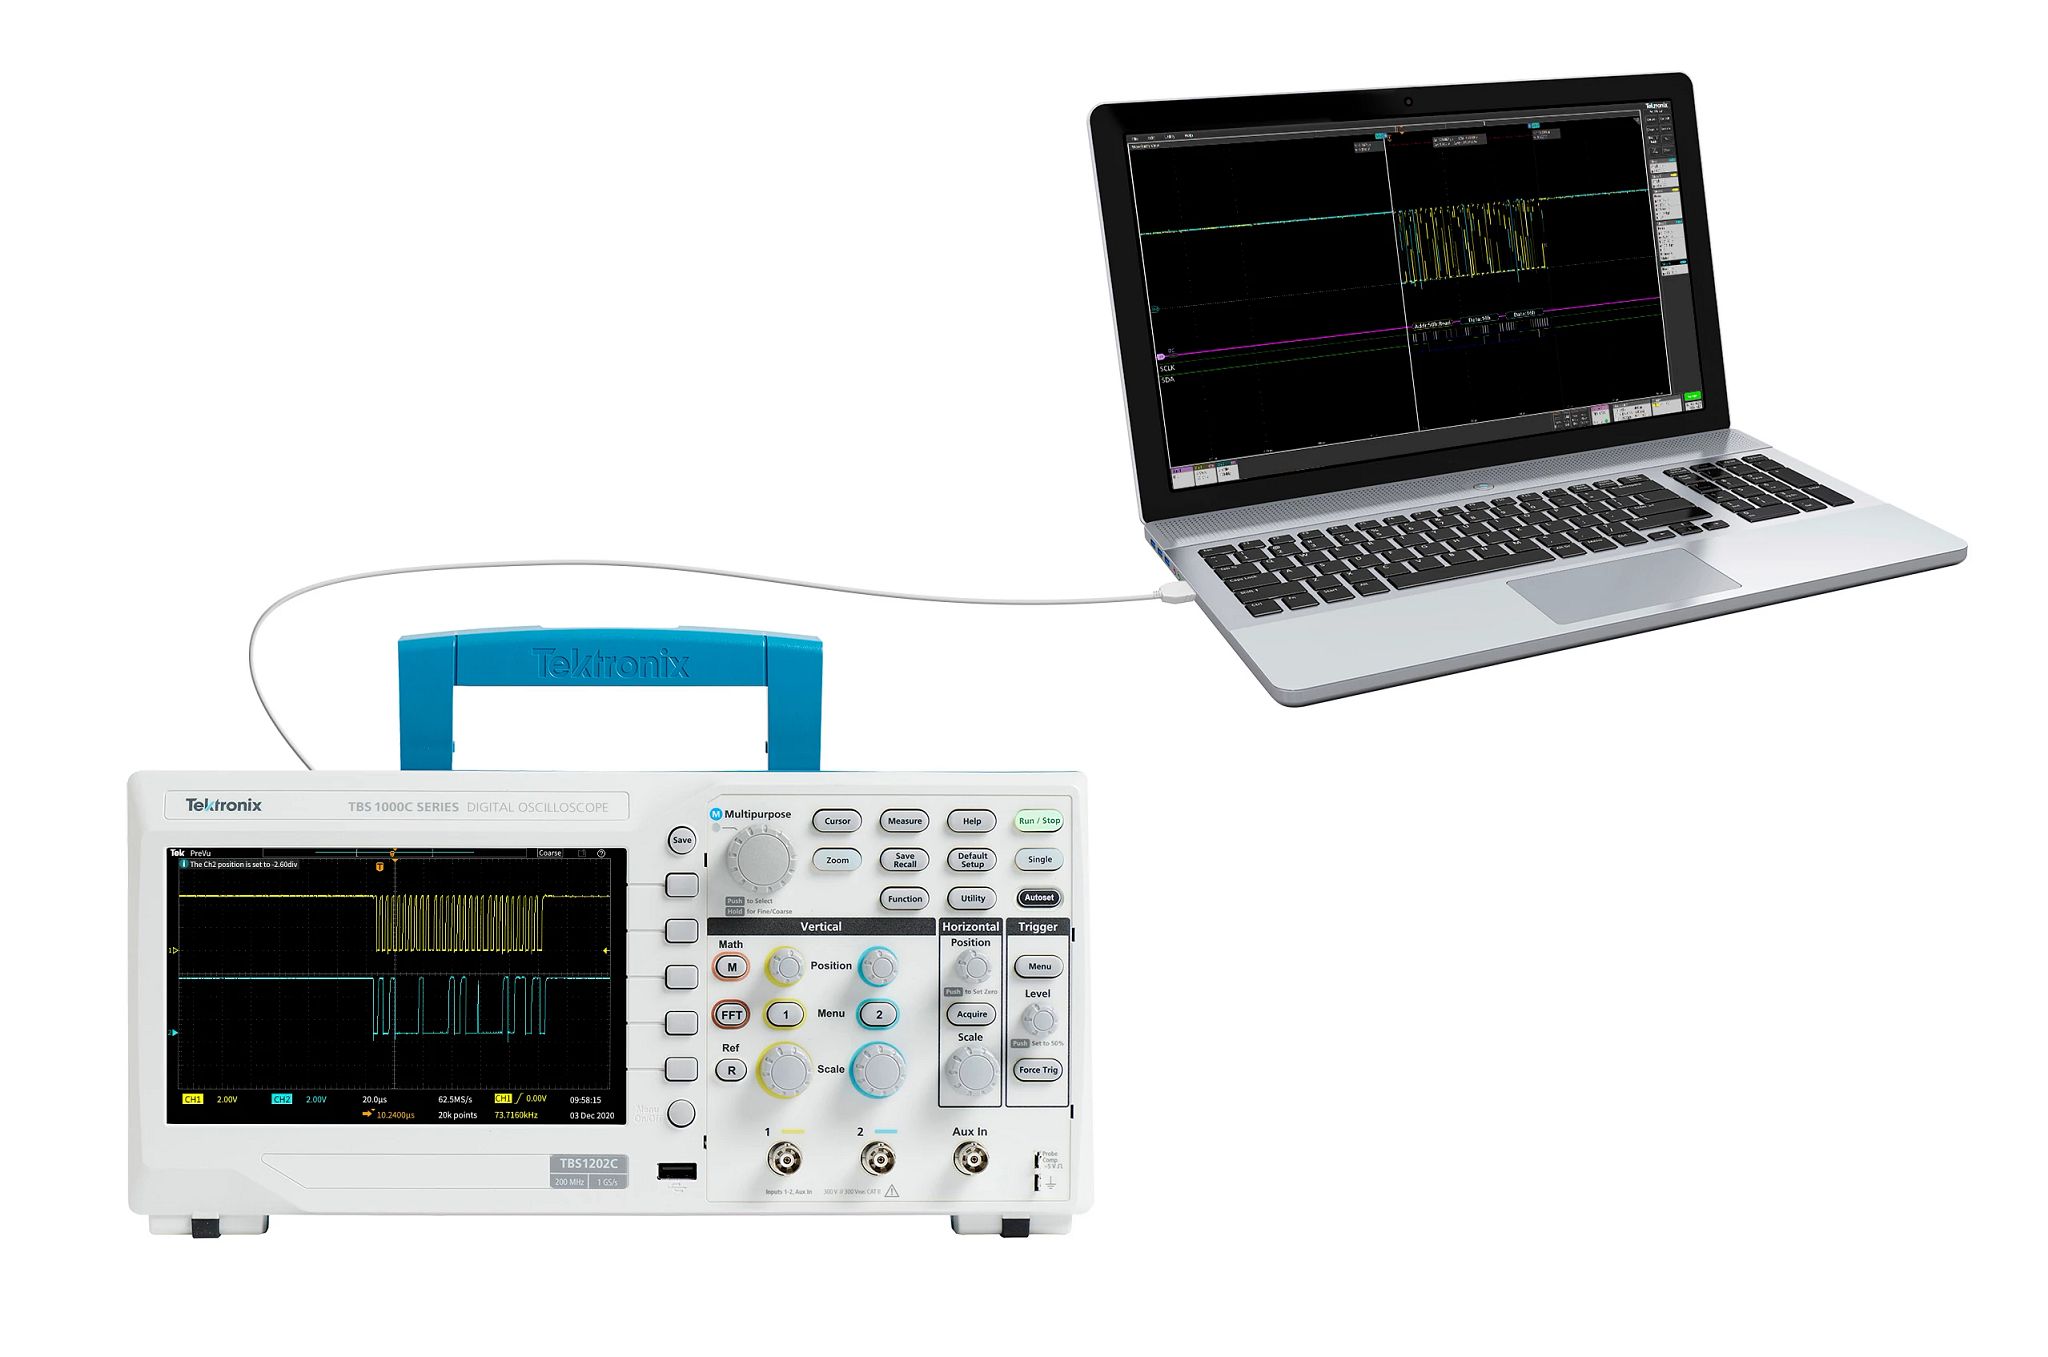 Oscilloscope software